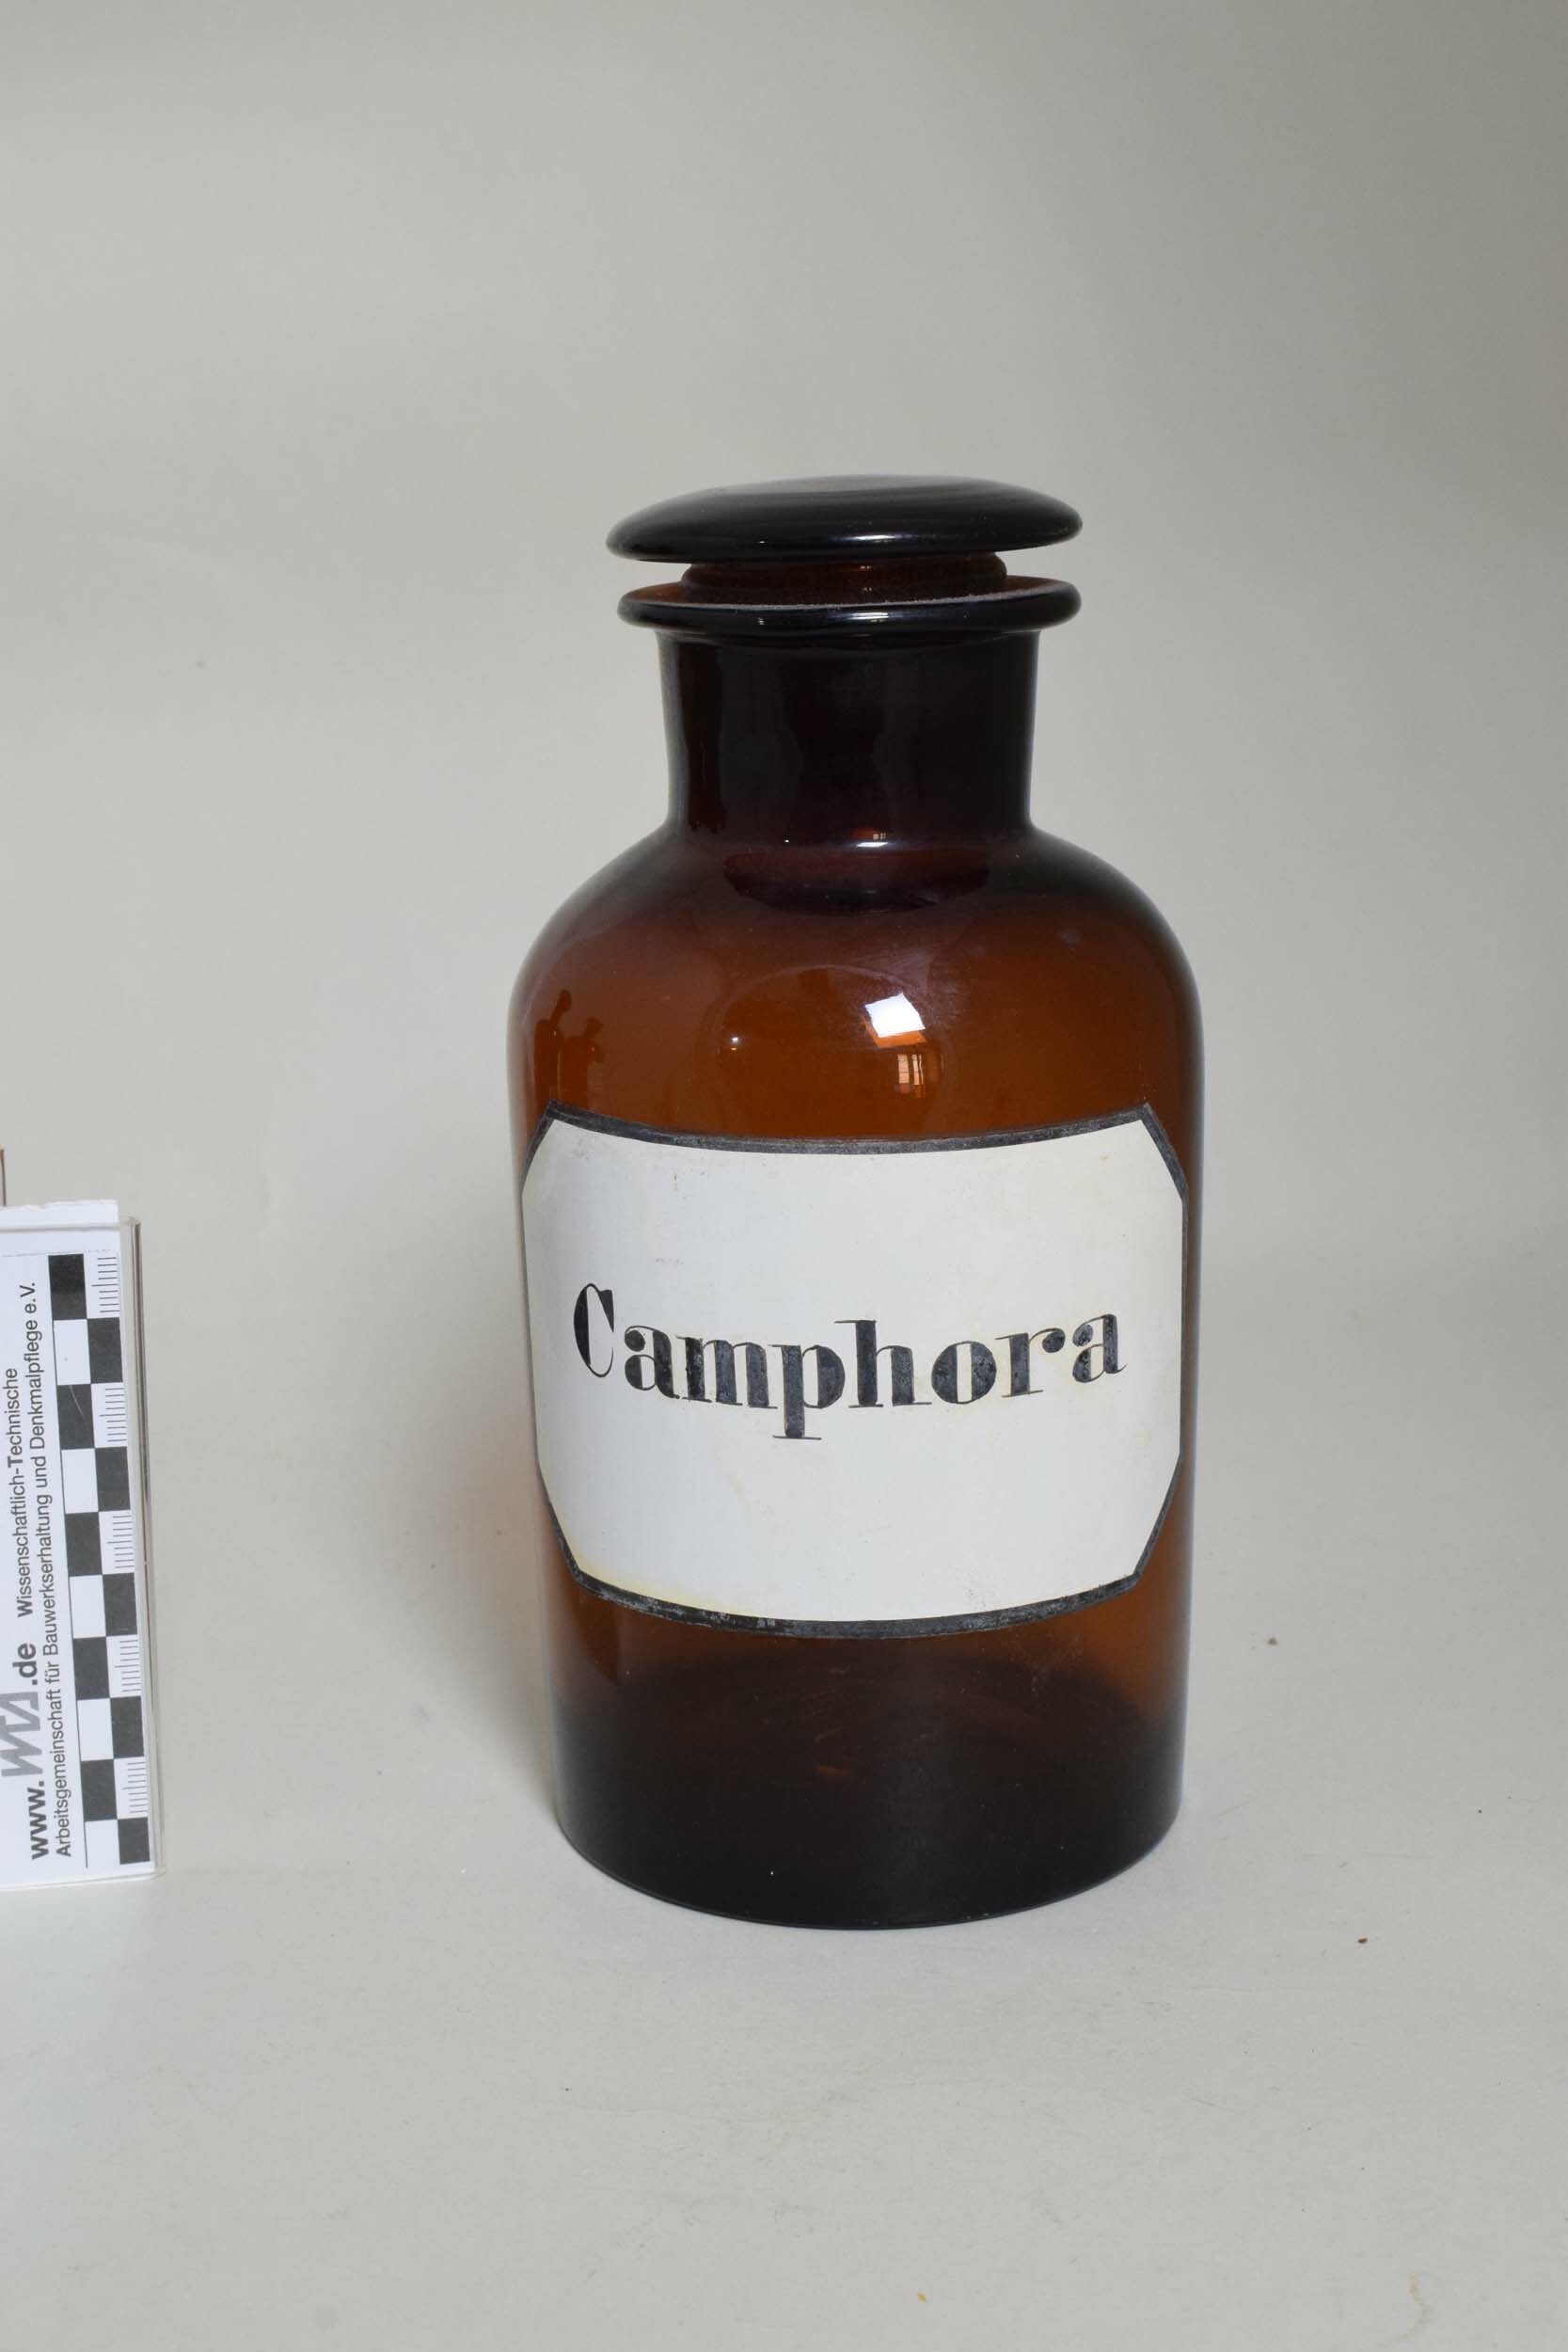 Apothekenflasche "Camphora" (Heimatmuseum Dohna CC BY-NC-SA)